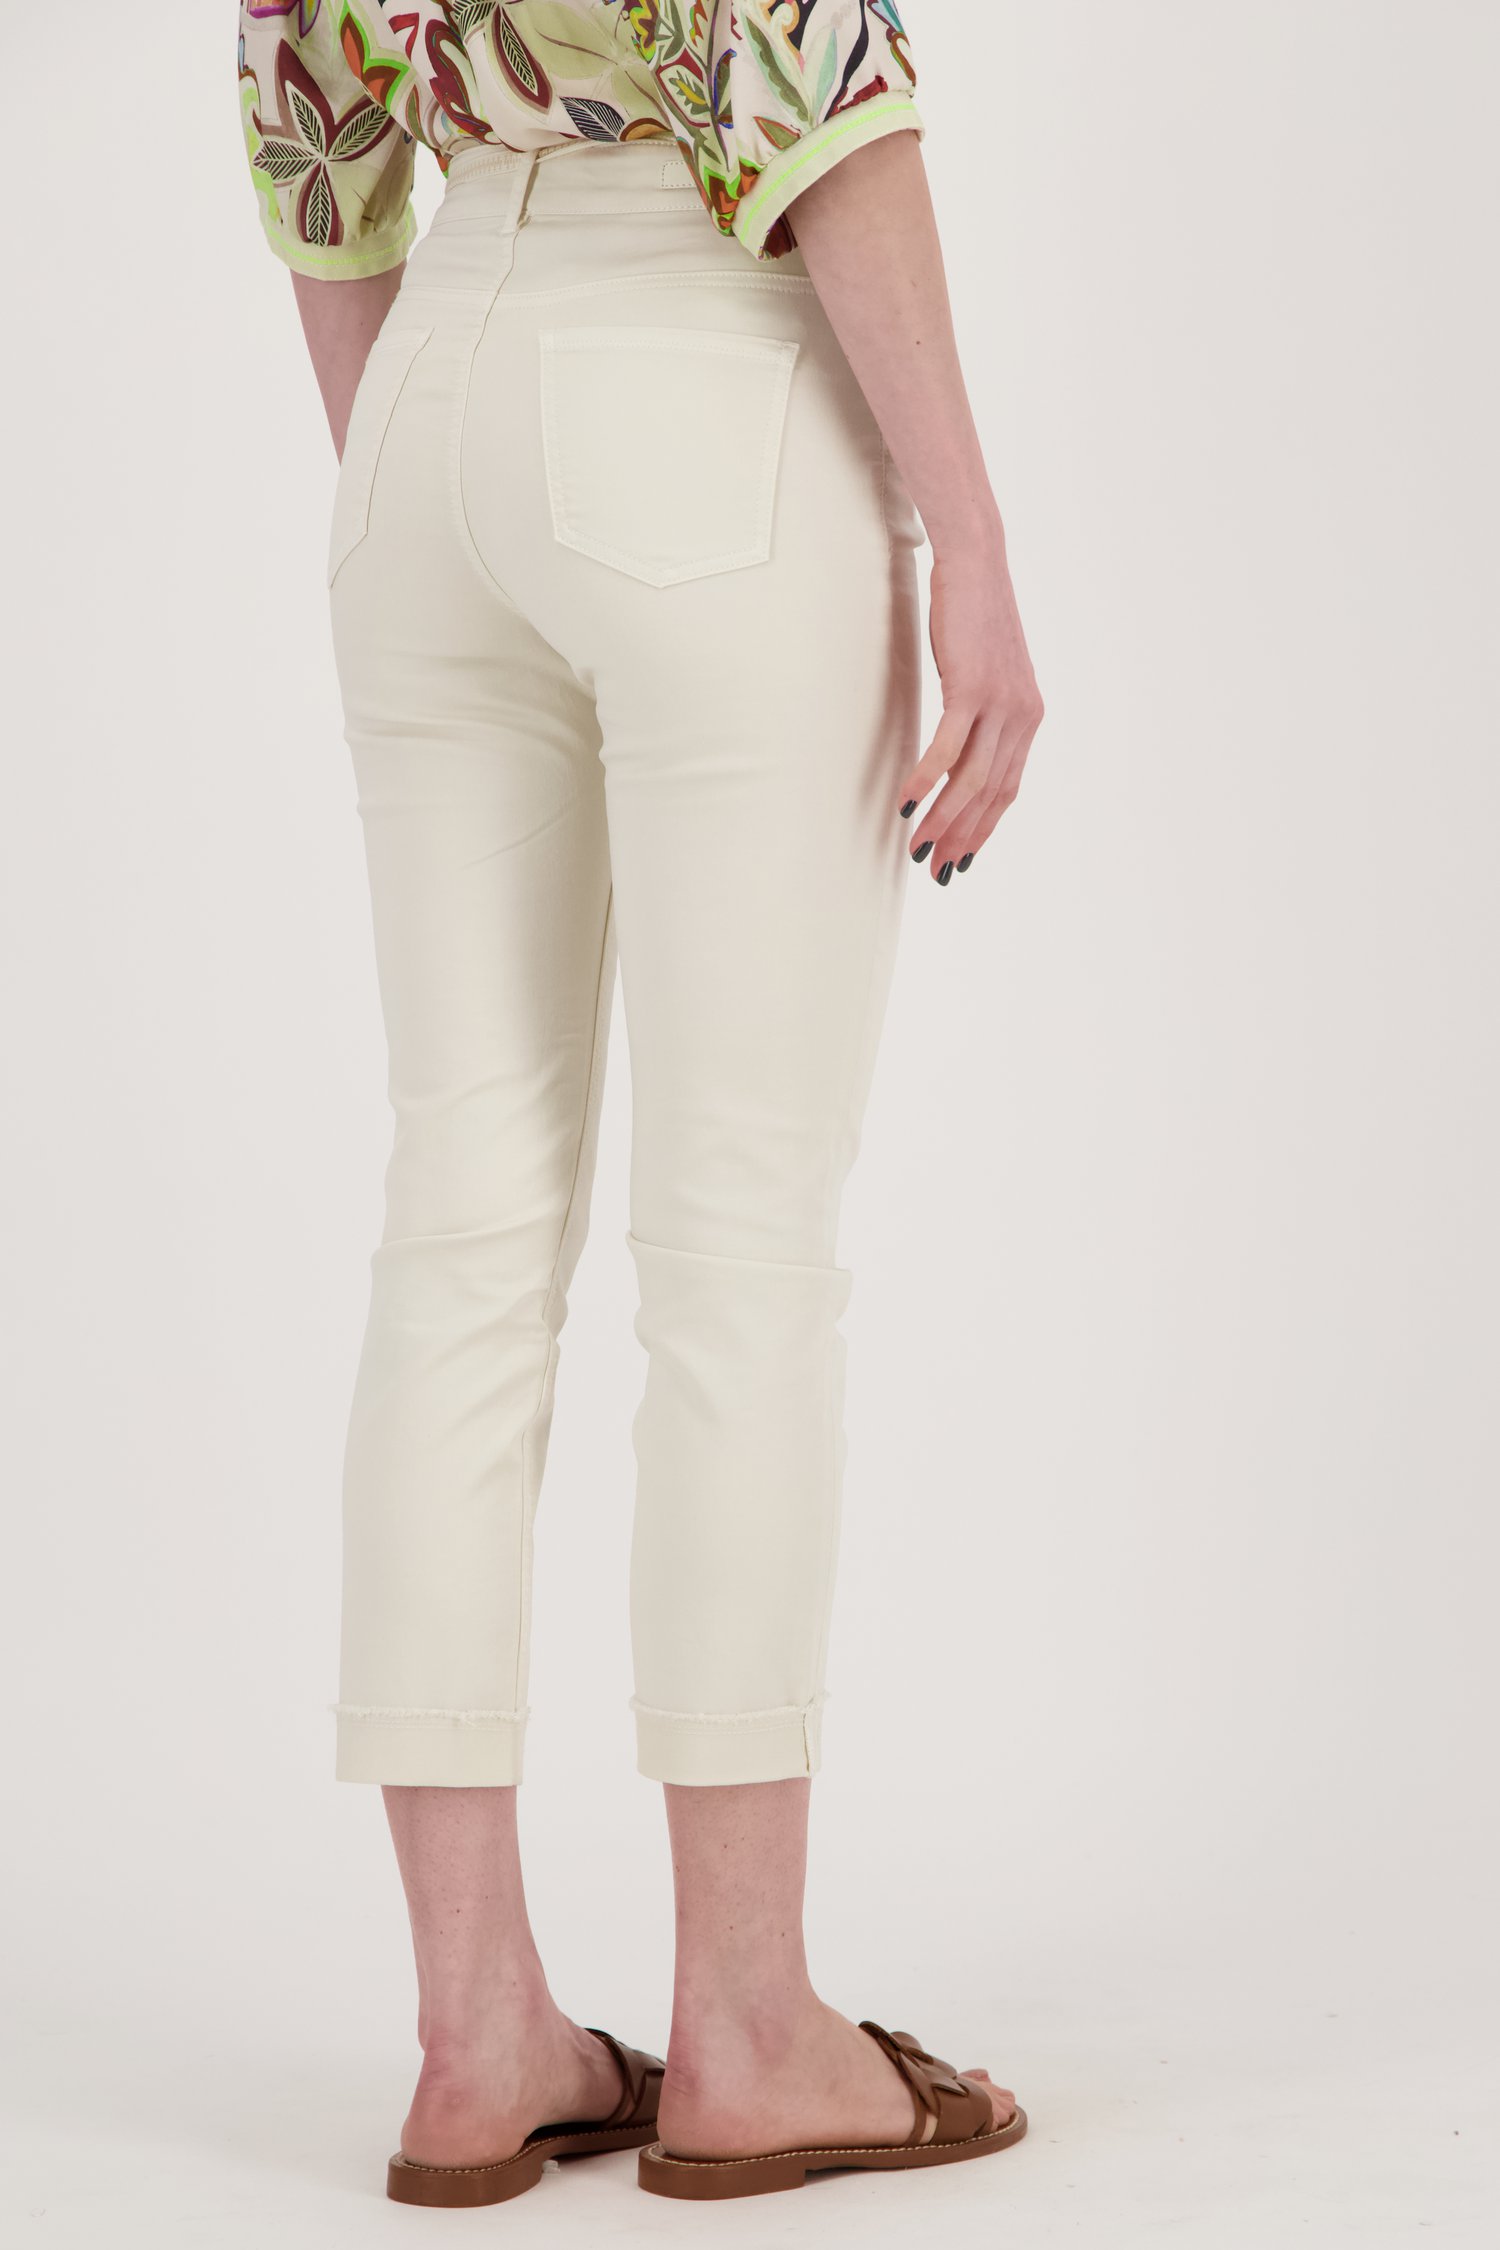 Ecru jeans - 7/8 lengte - Slim fit van Geisha voor Dames